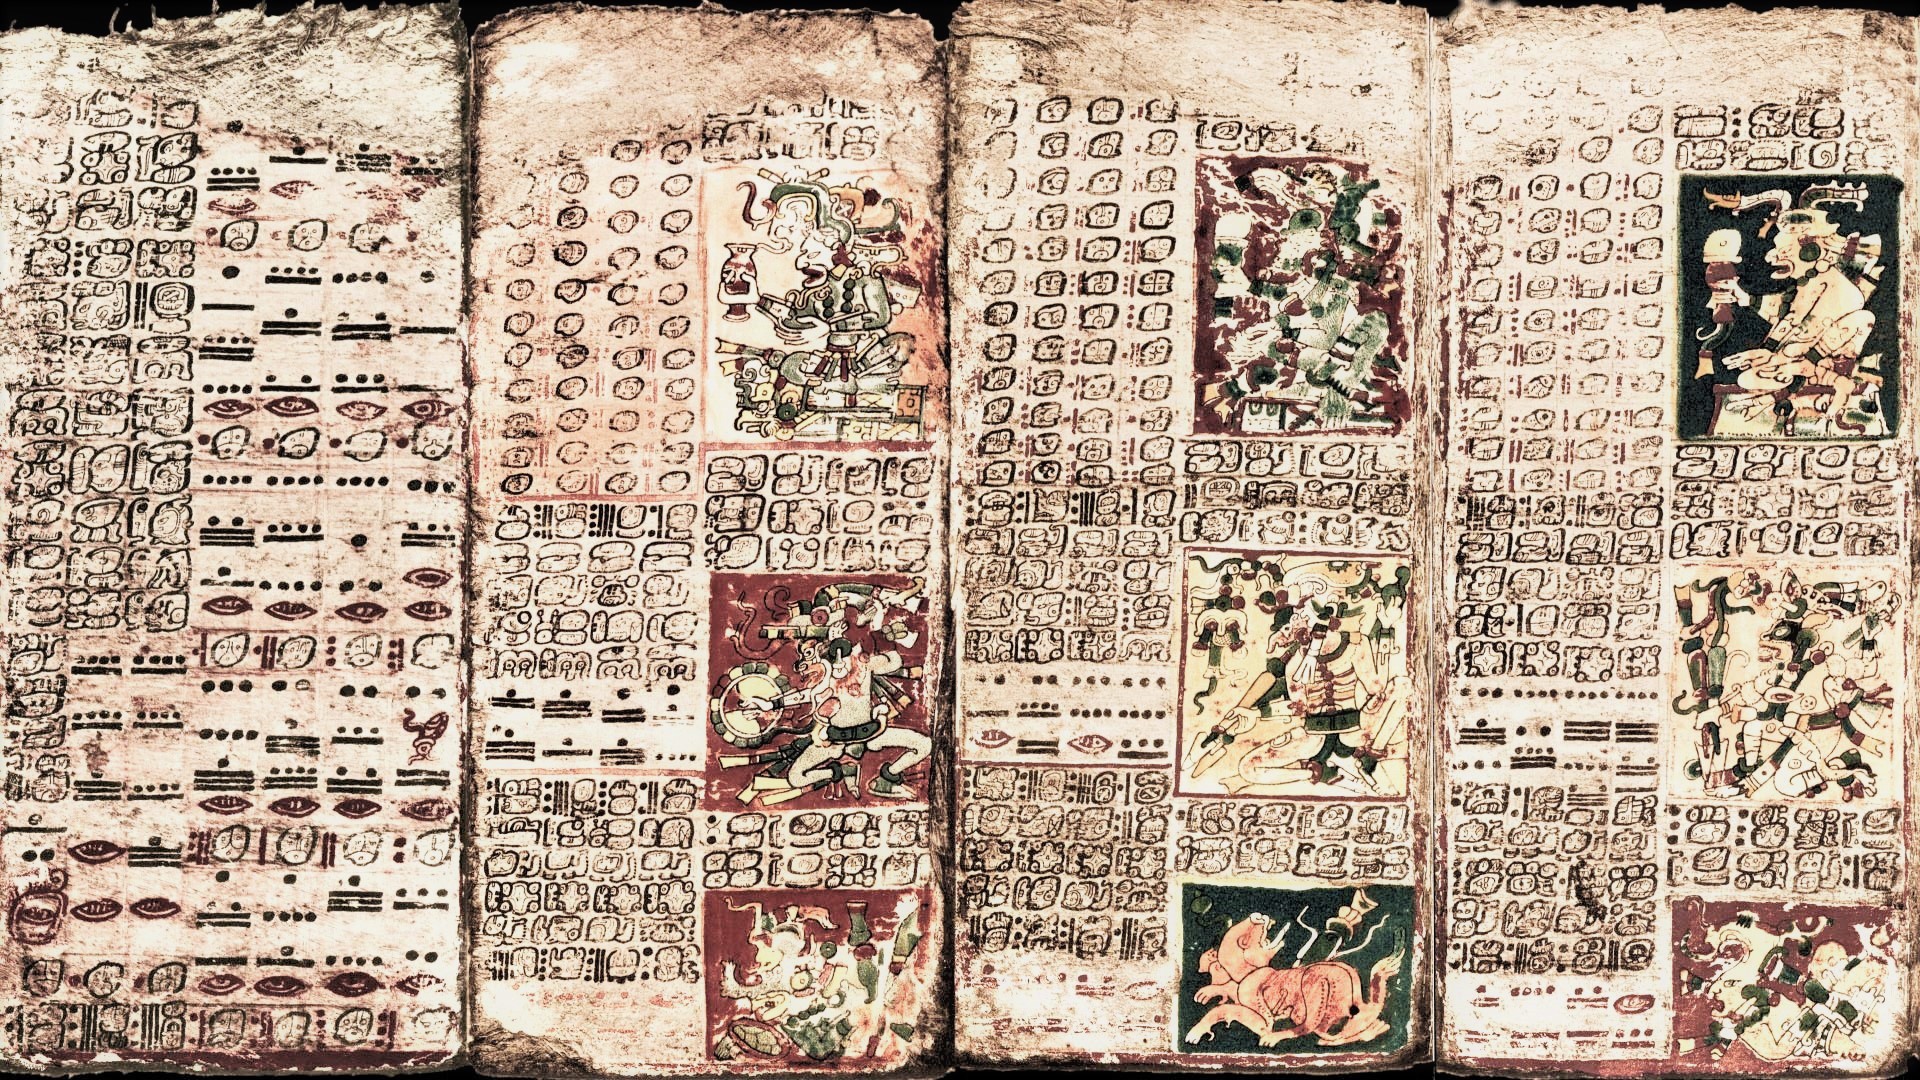 Burning the Maya Books: The 1562 Tragedy at Mani